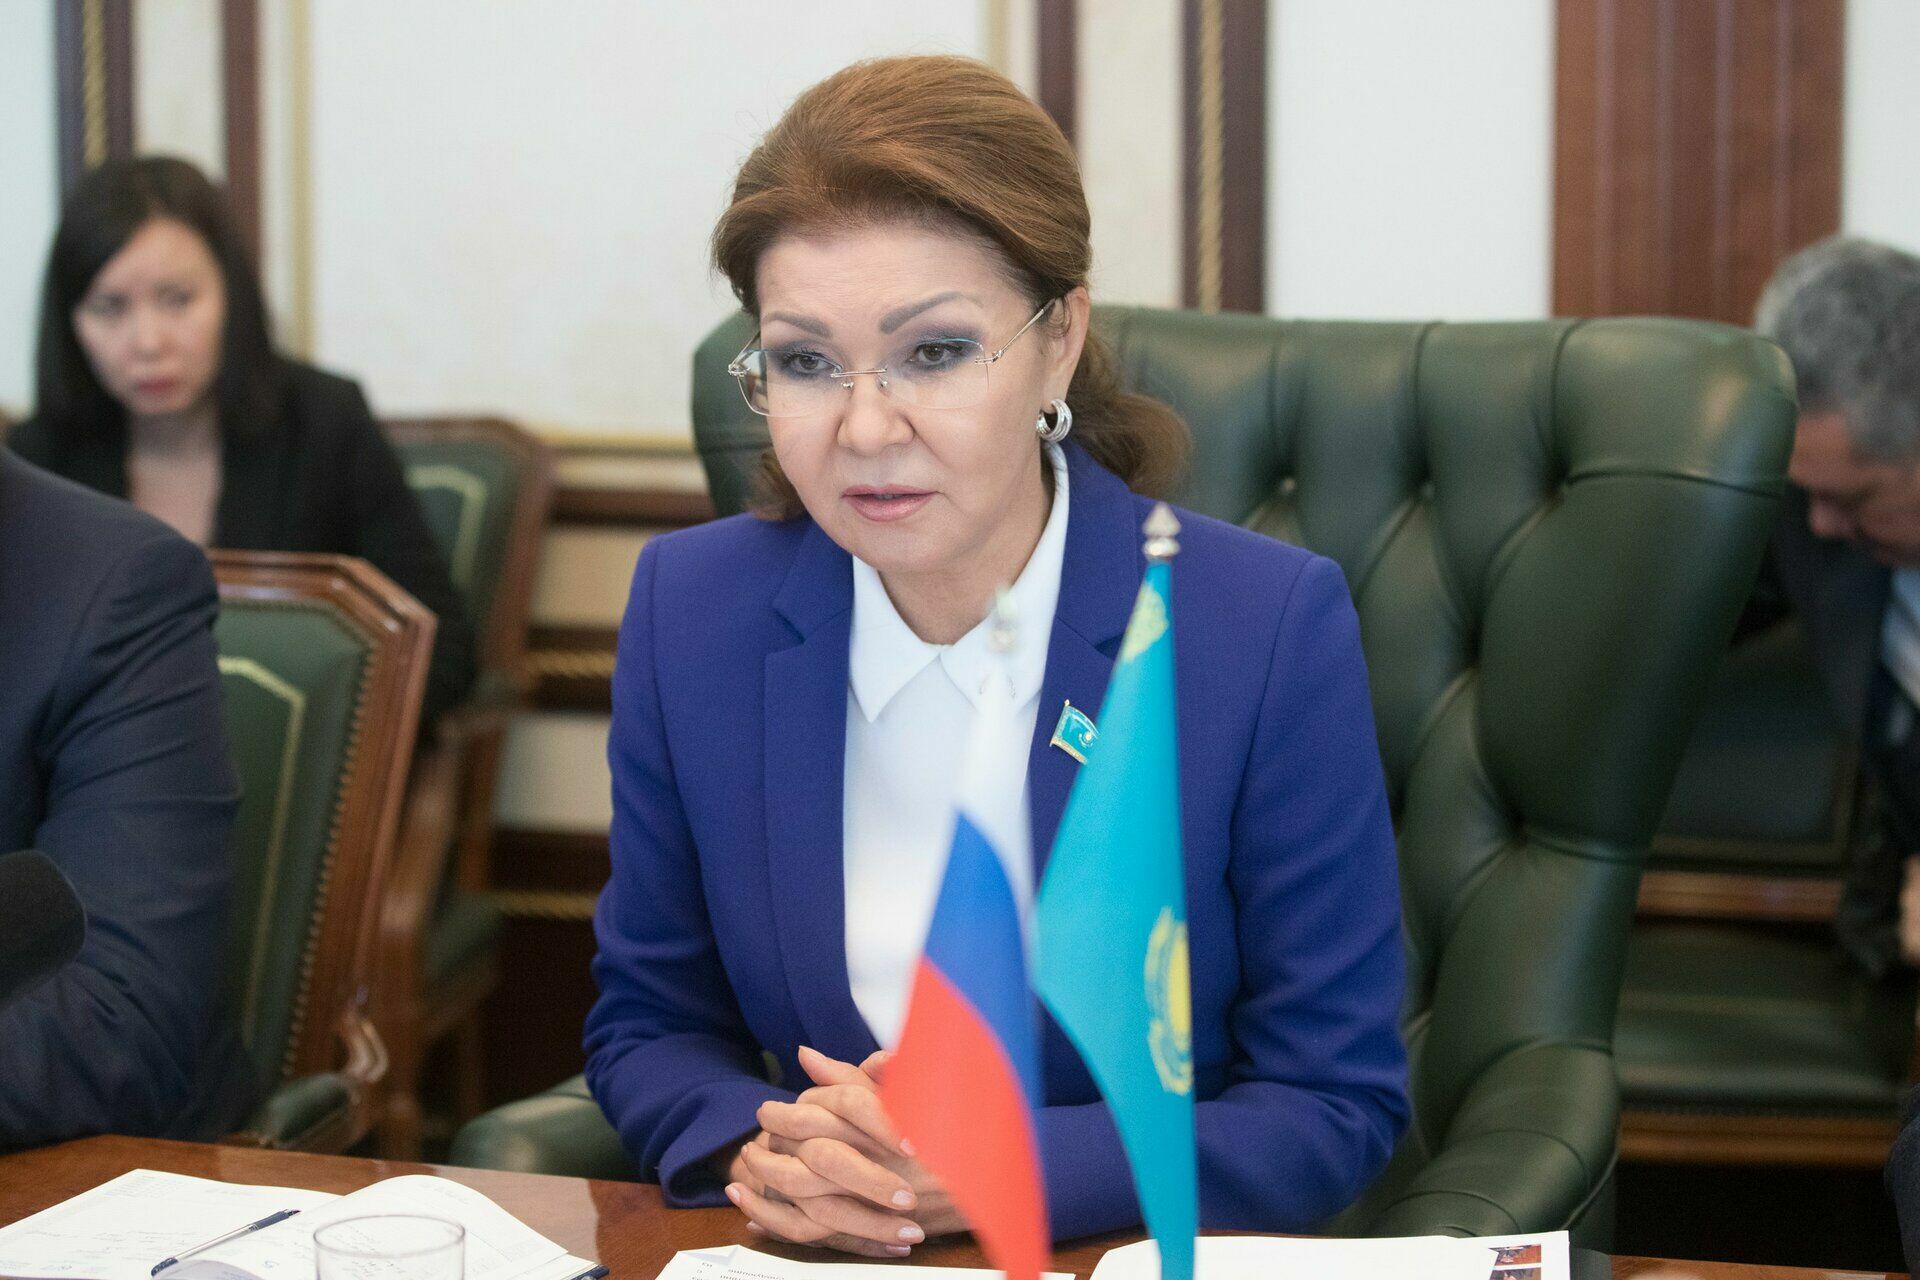 The Parliament of Kazakhstan approved the resignation of Dariga Nazarbayeva